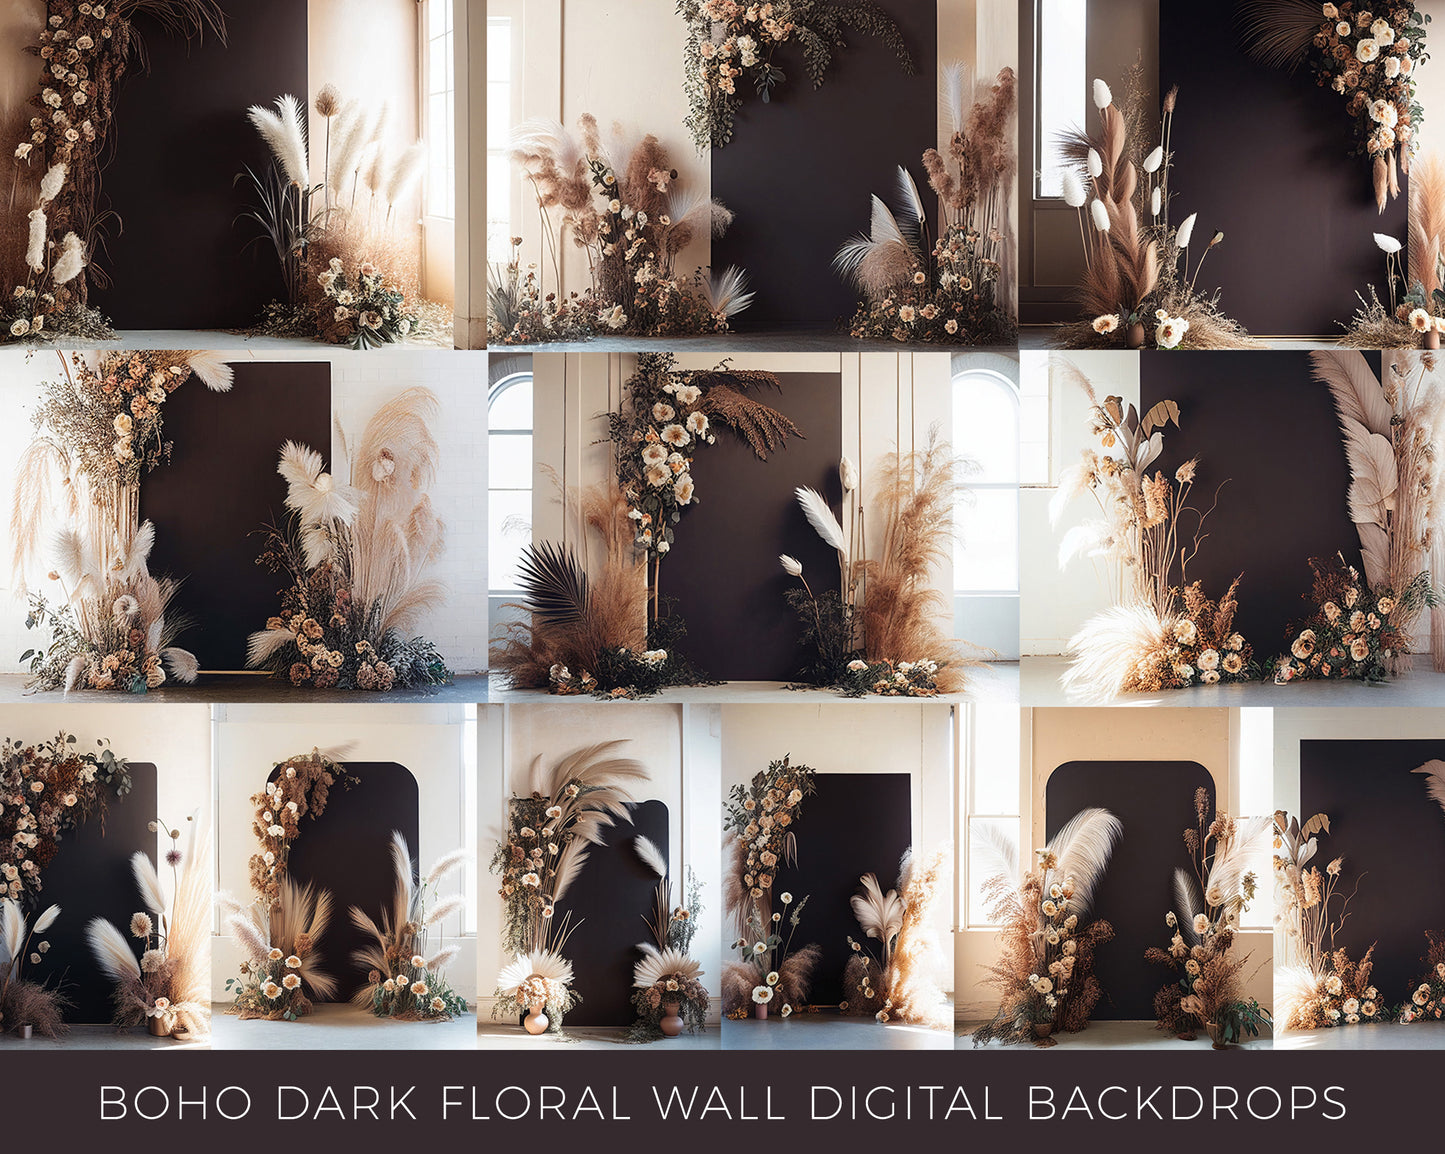 Boho Floral Wall Digital Backdrops